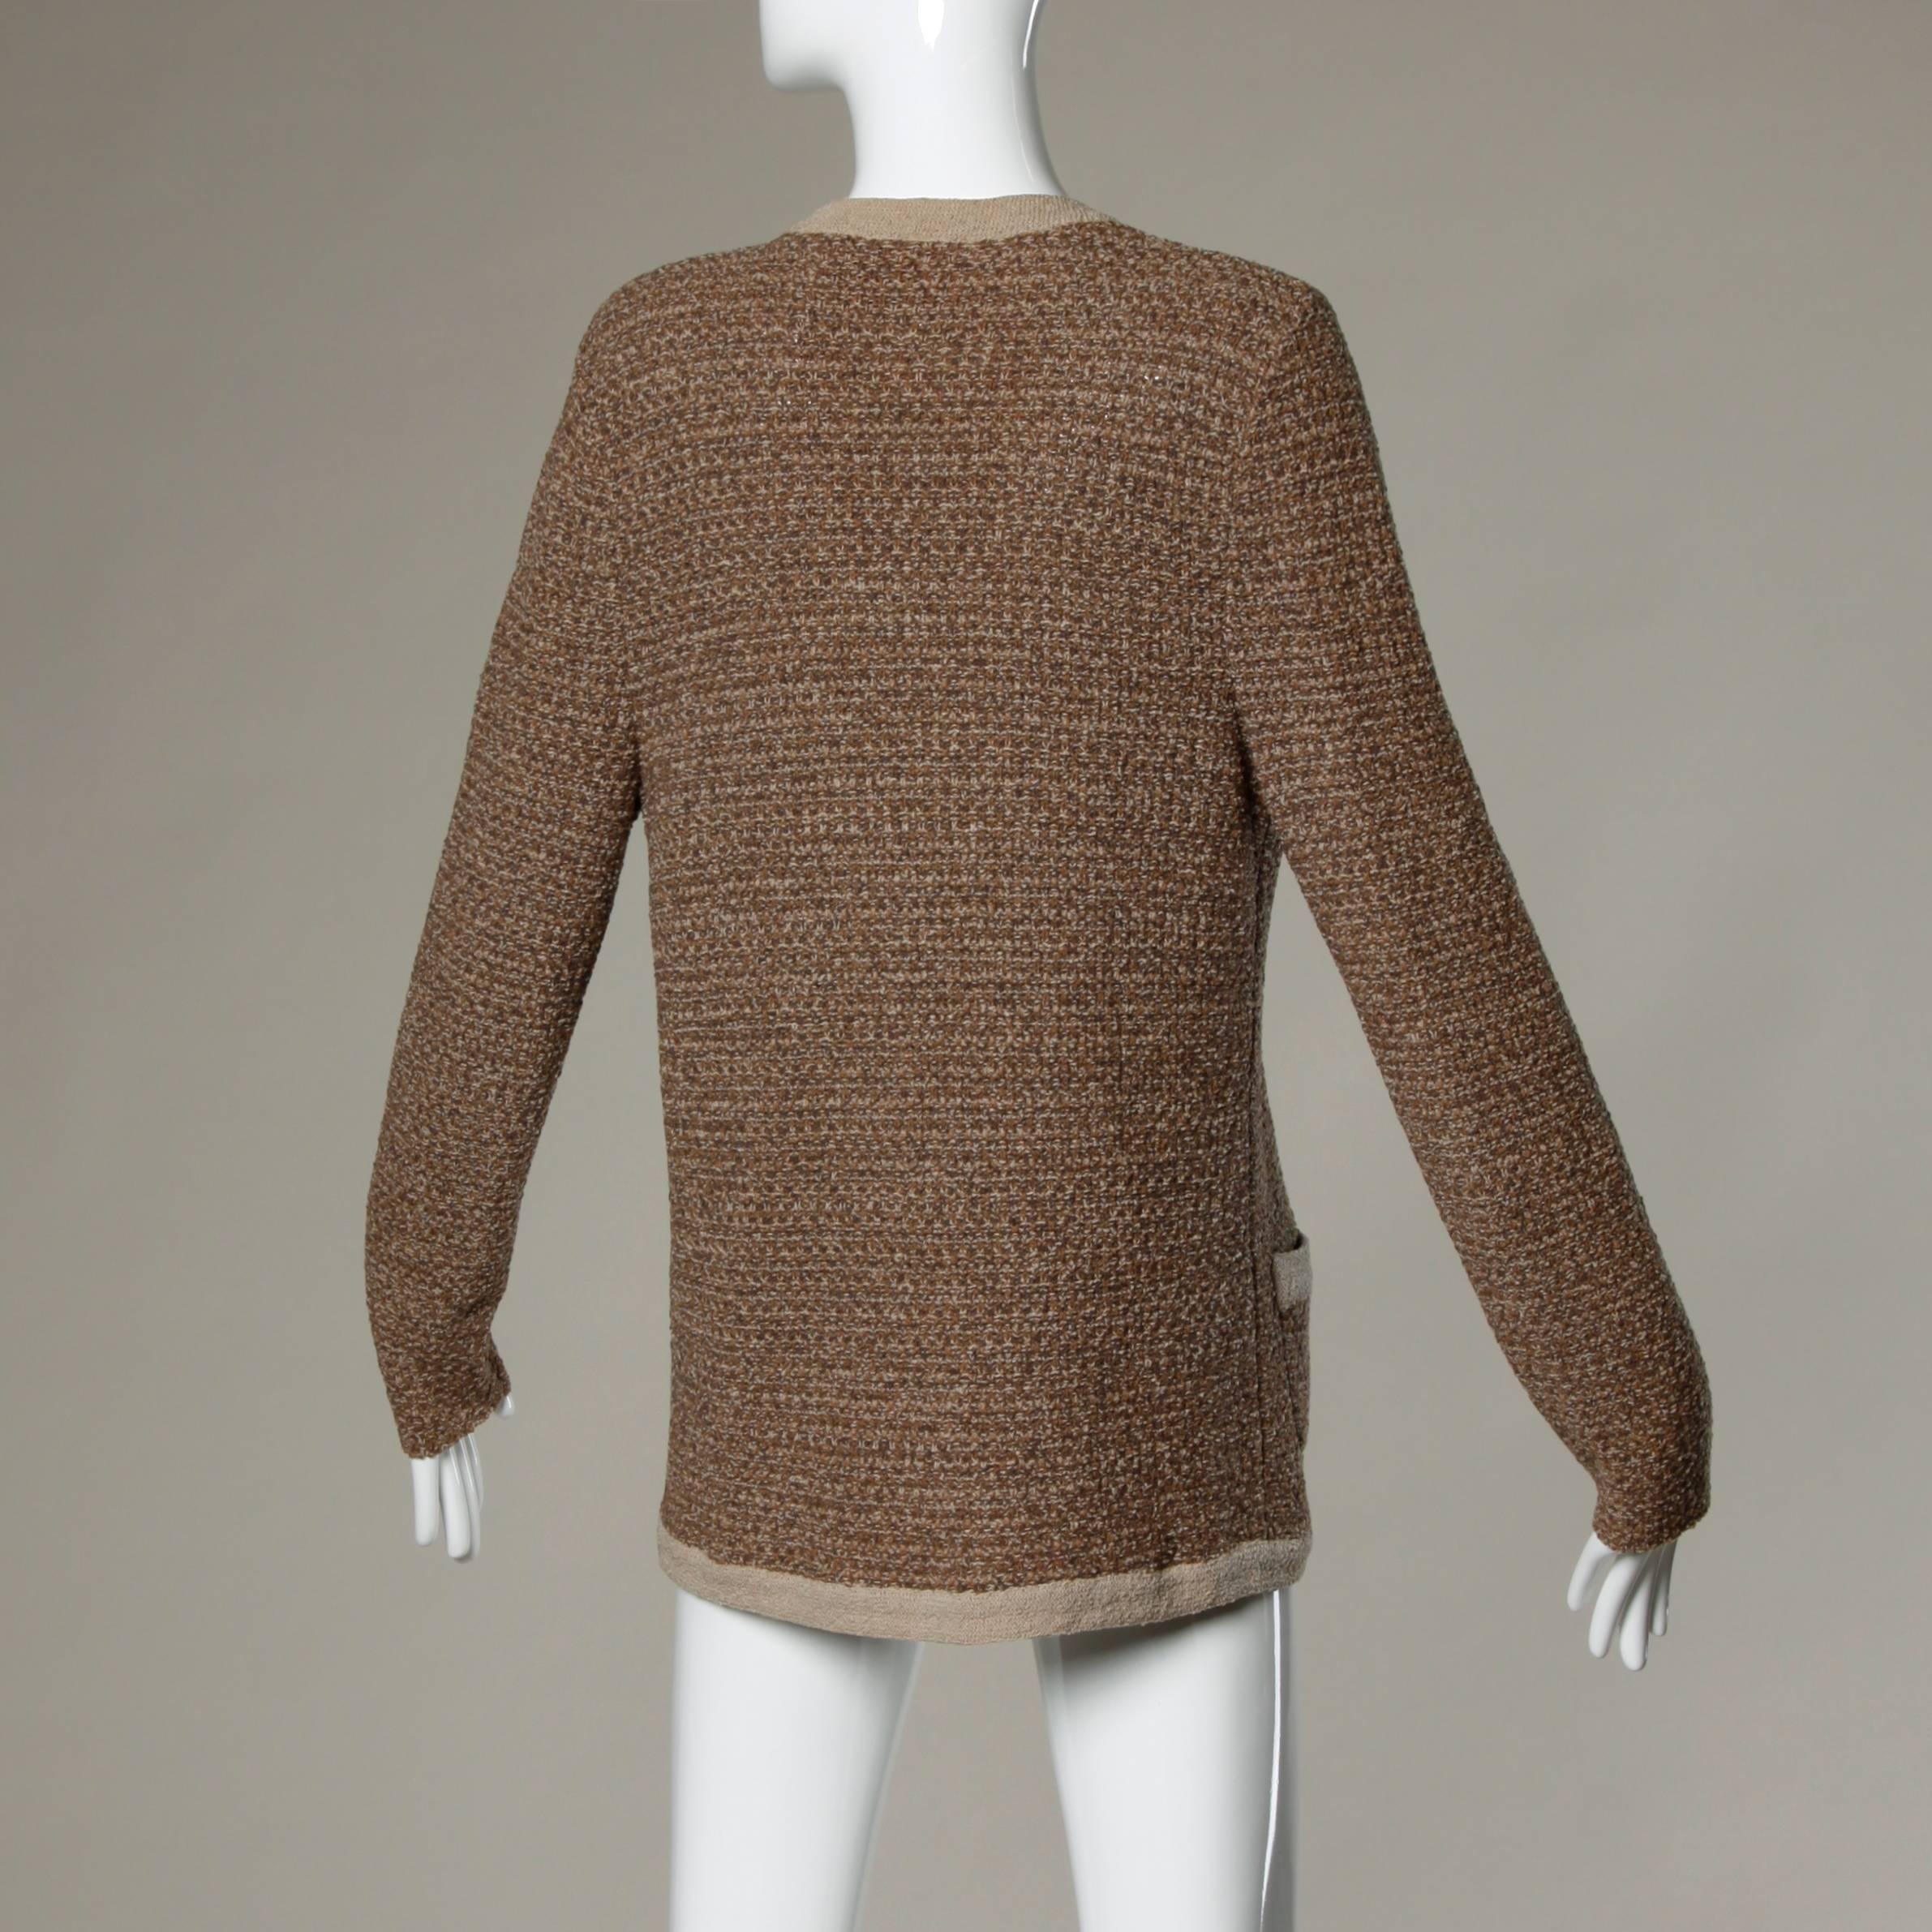 Brown Bonnie Cashin 1960s Vintage Wool Knit Cardigan Sweater Jacket